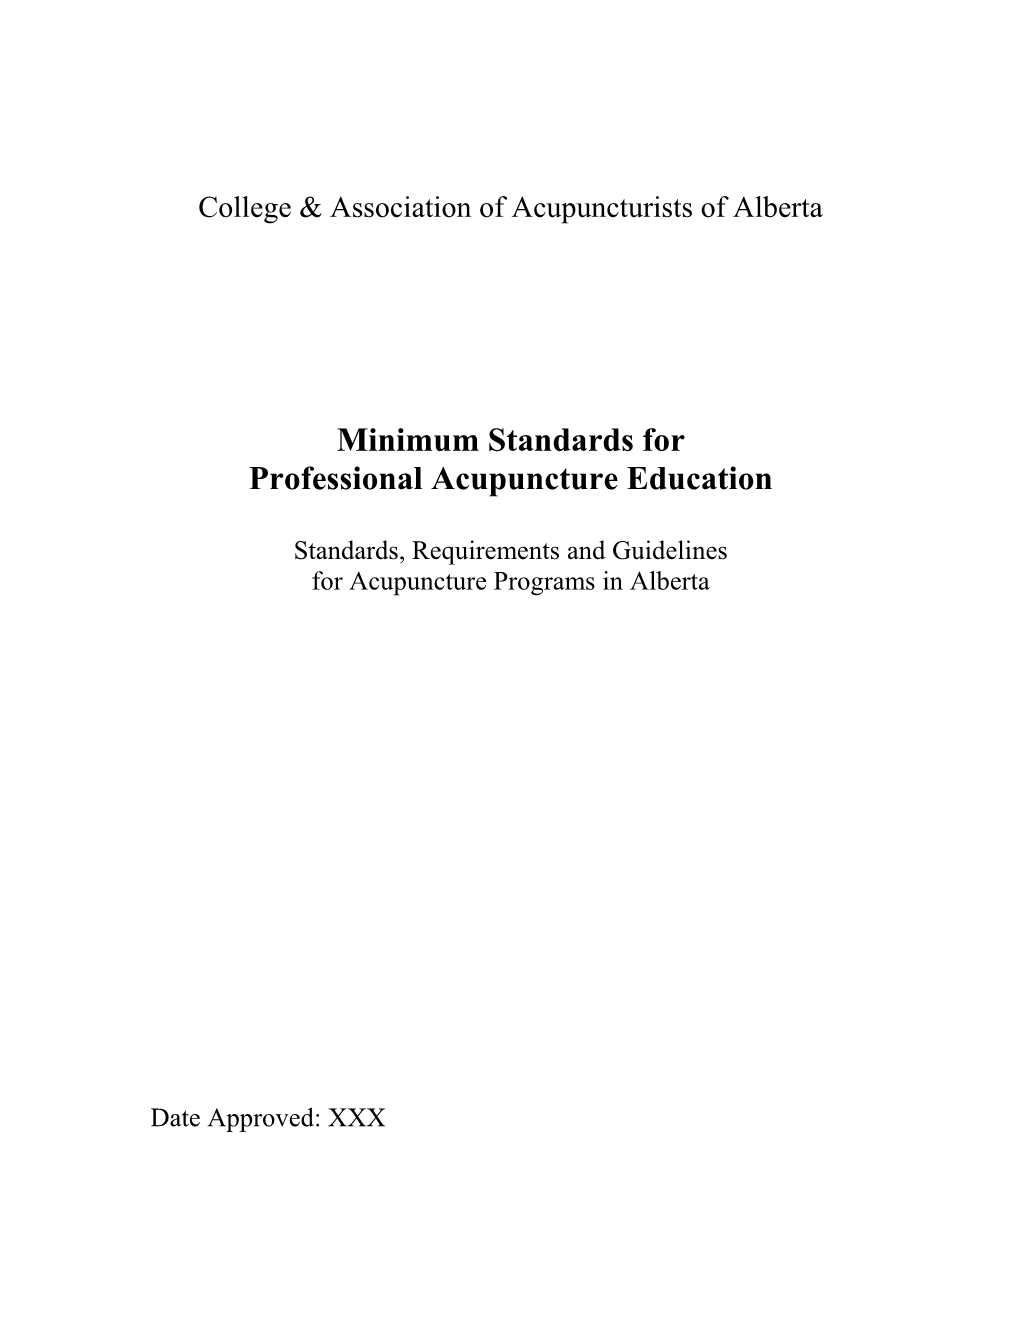 Minimum Standards for Professional Acupuncture Education